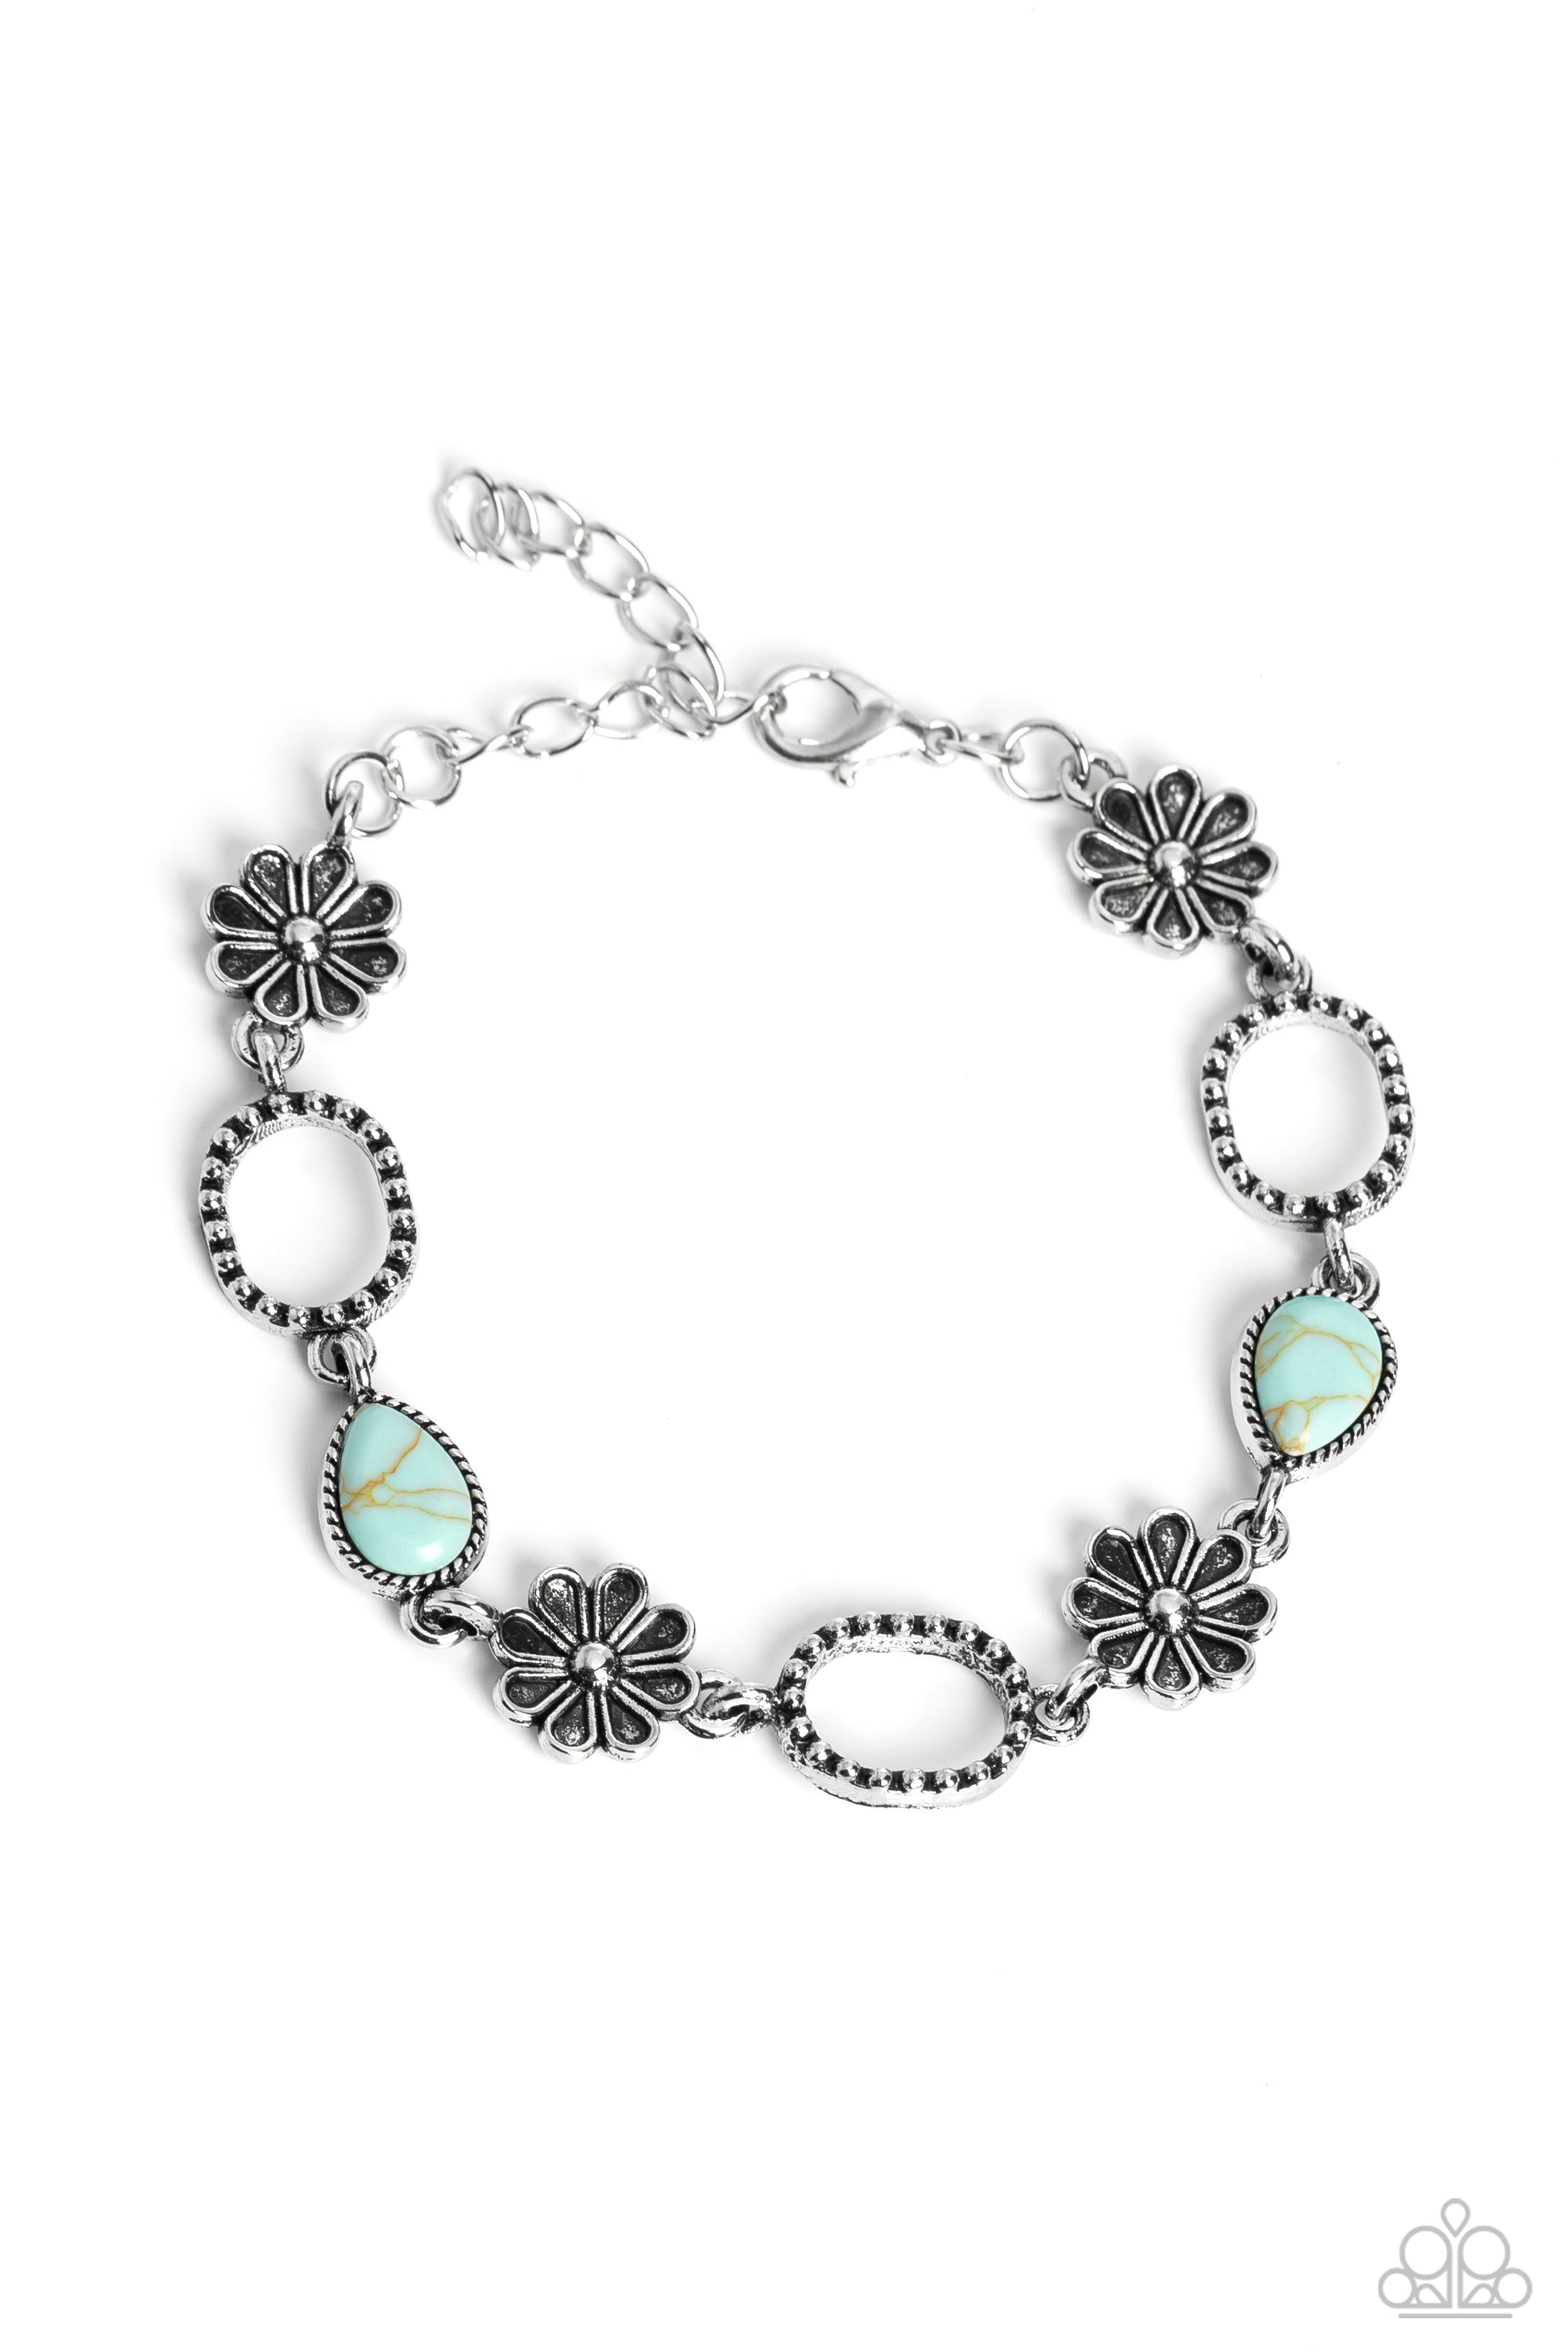 Casablanca Craze Blue Stone Bracelet - Paparazzi Accessories- lightbox - CarasShop.com - $5 Jewelry by Cara Jewels